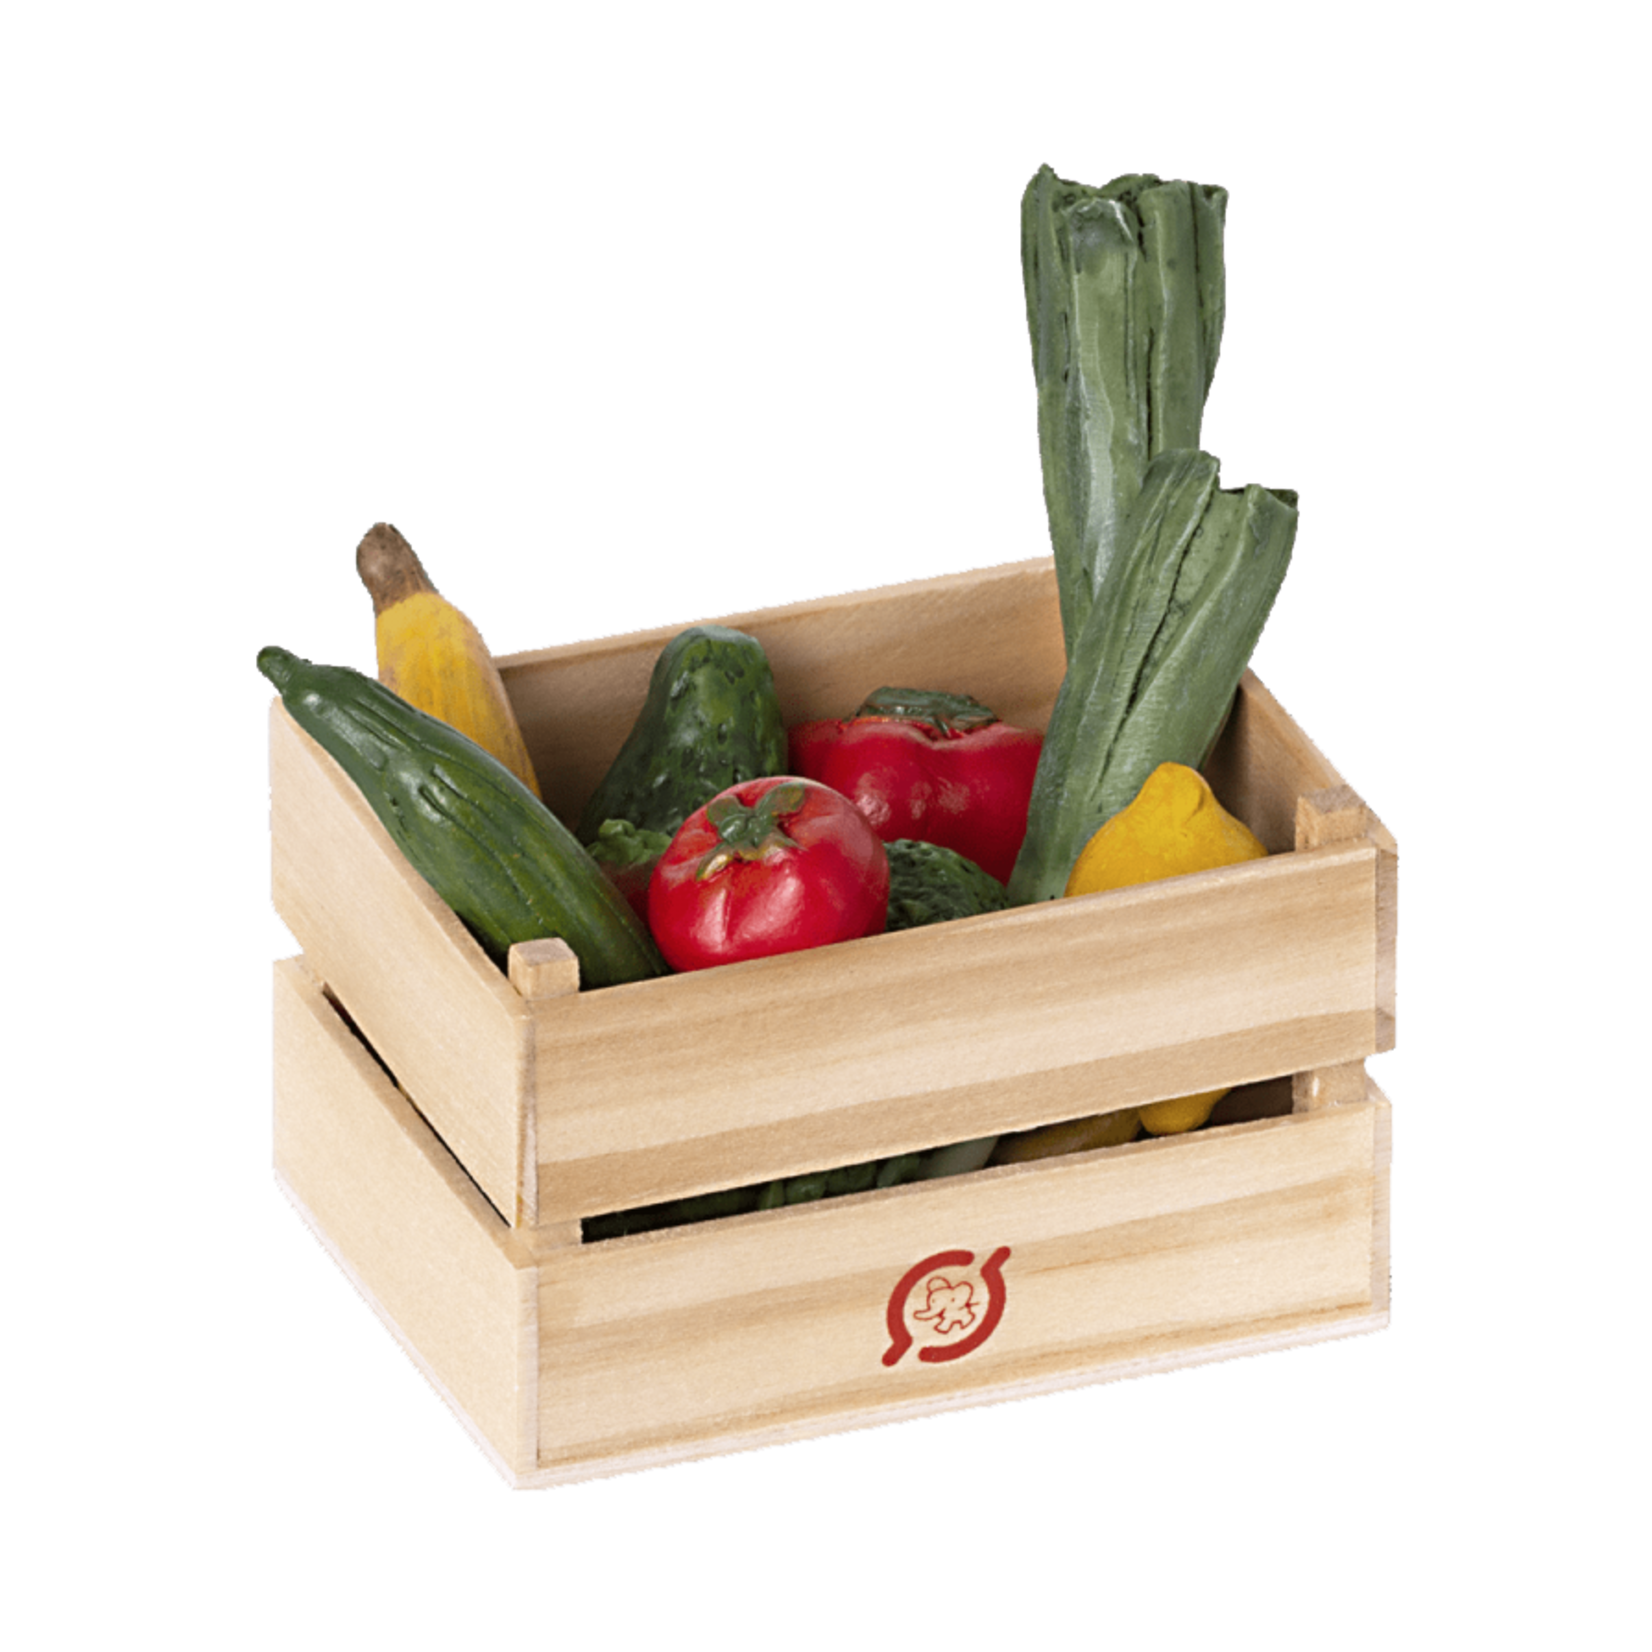 Maileg Maileg veggies and fruits in crate